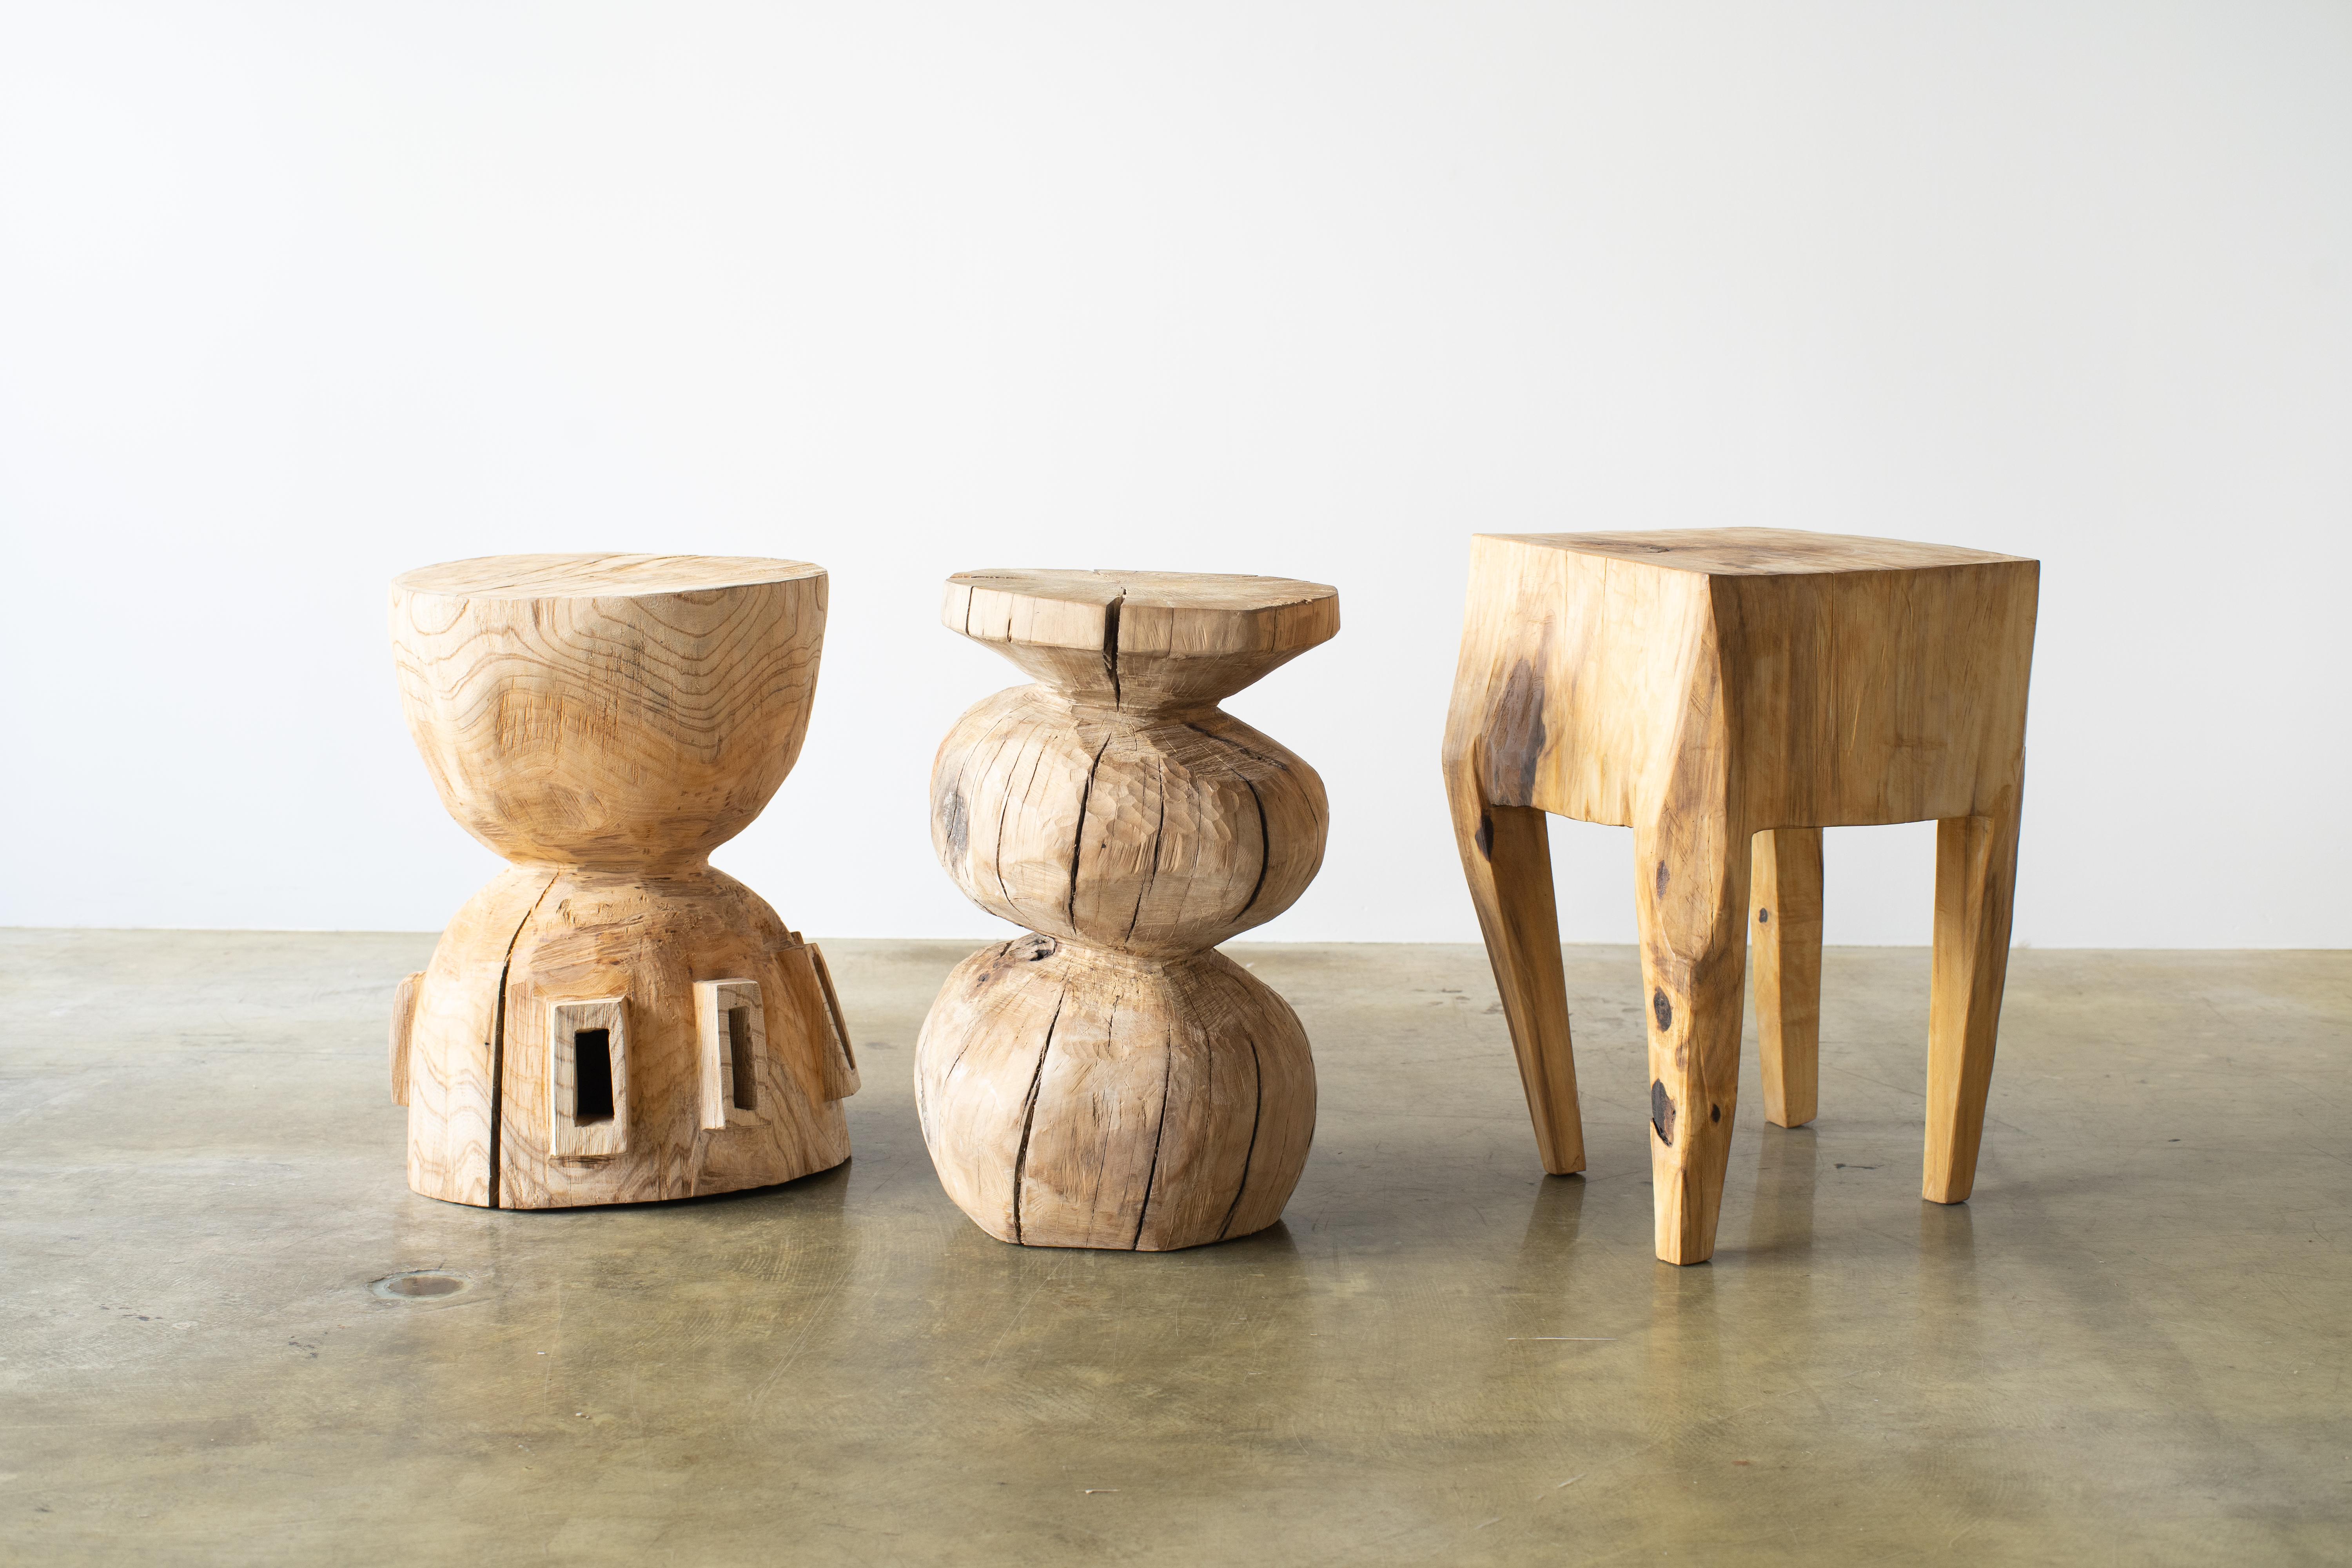 Hiroyuki Nishimura Furniture Sculptural Wood Stool 10-12 Tribal Glamping 2